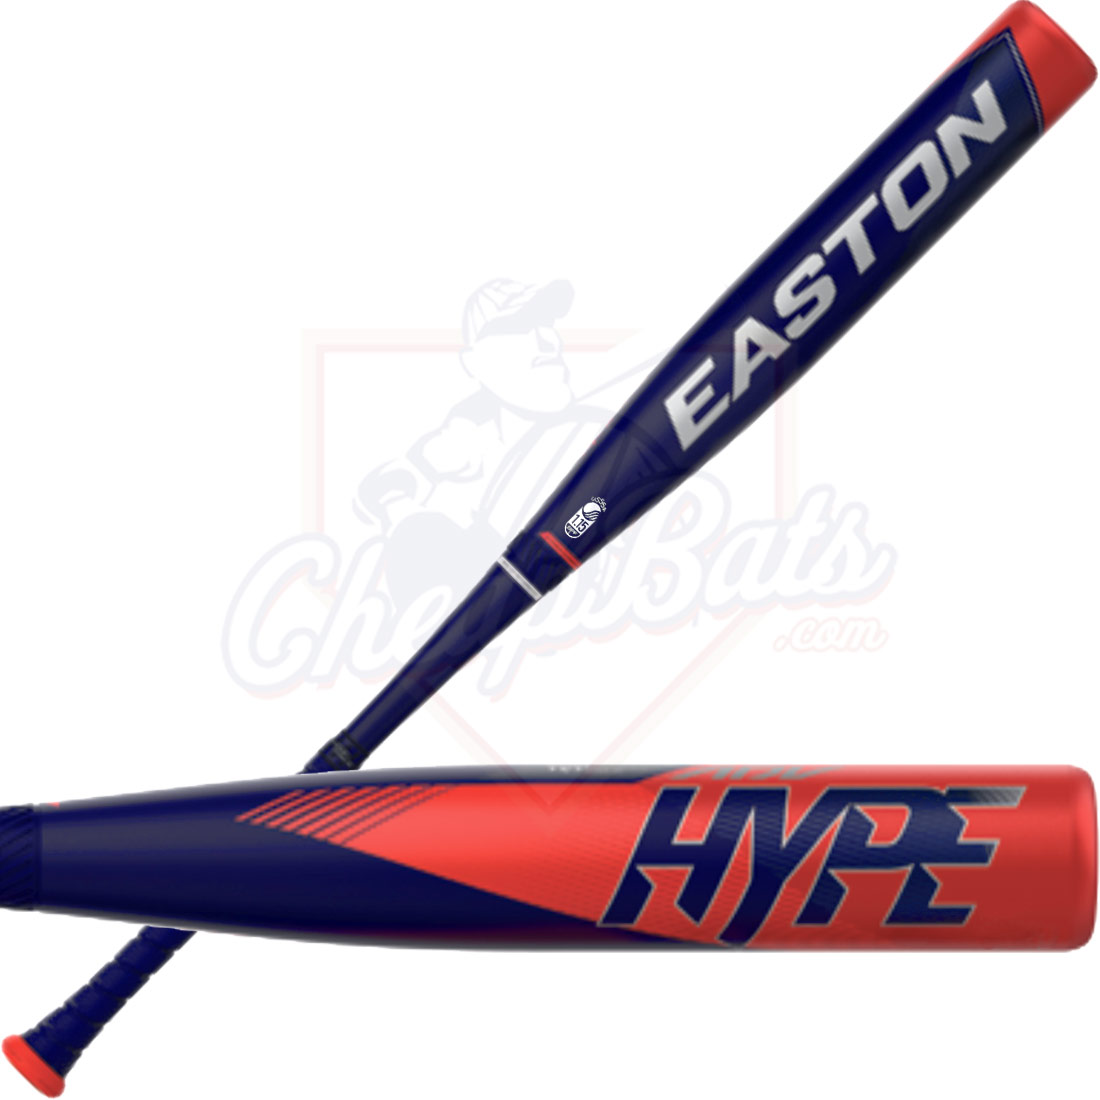 2022 Easton ADV Hype Youth USSSA Baseball Bat